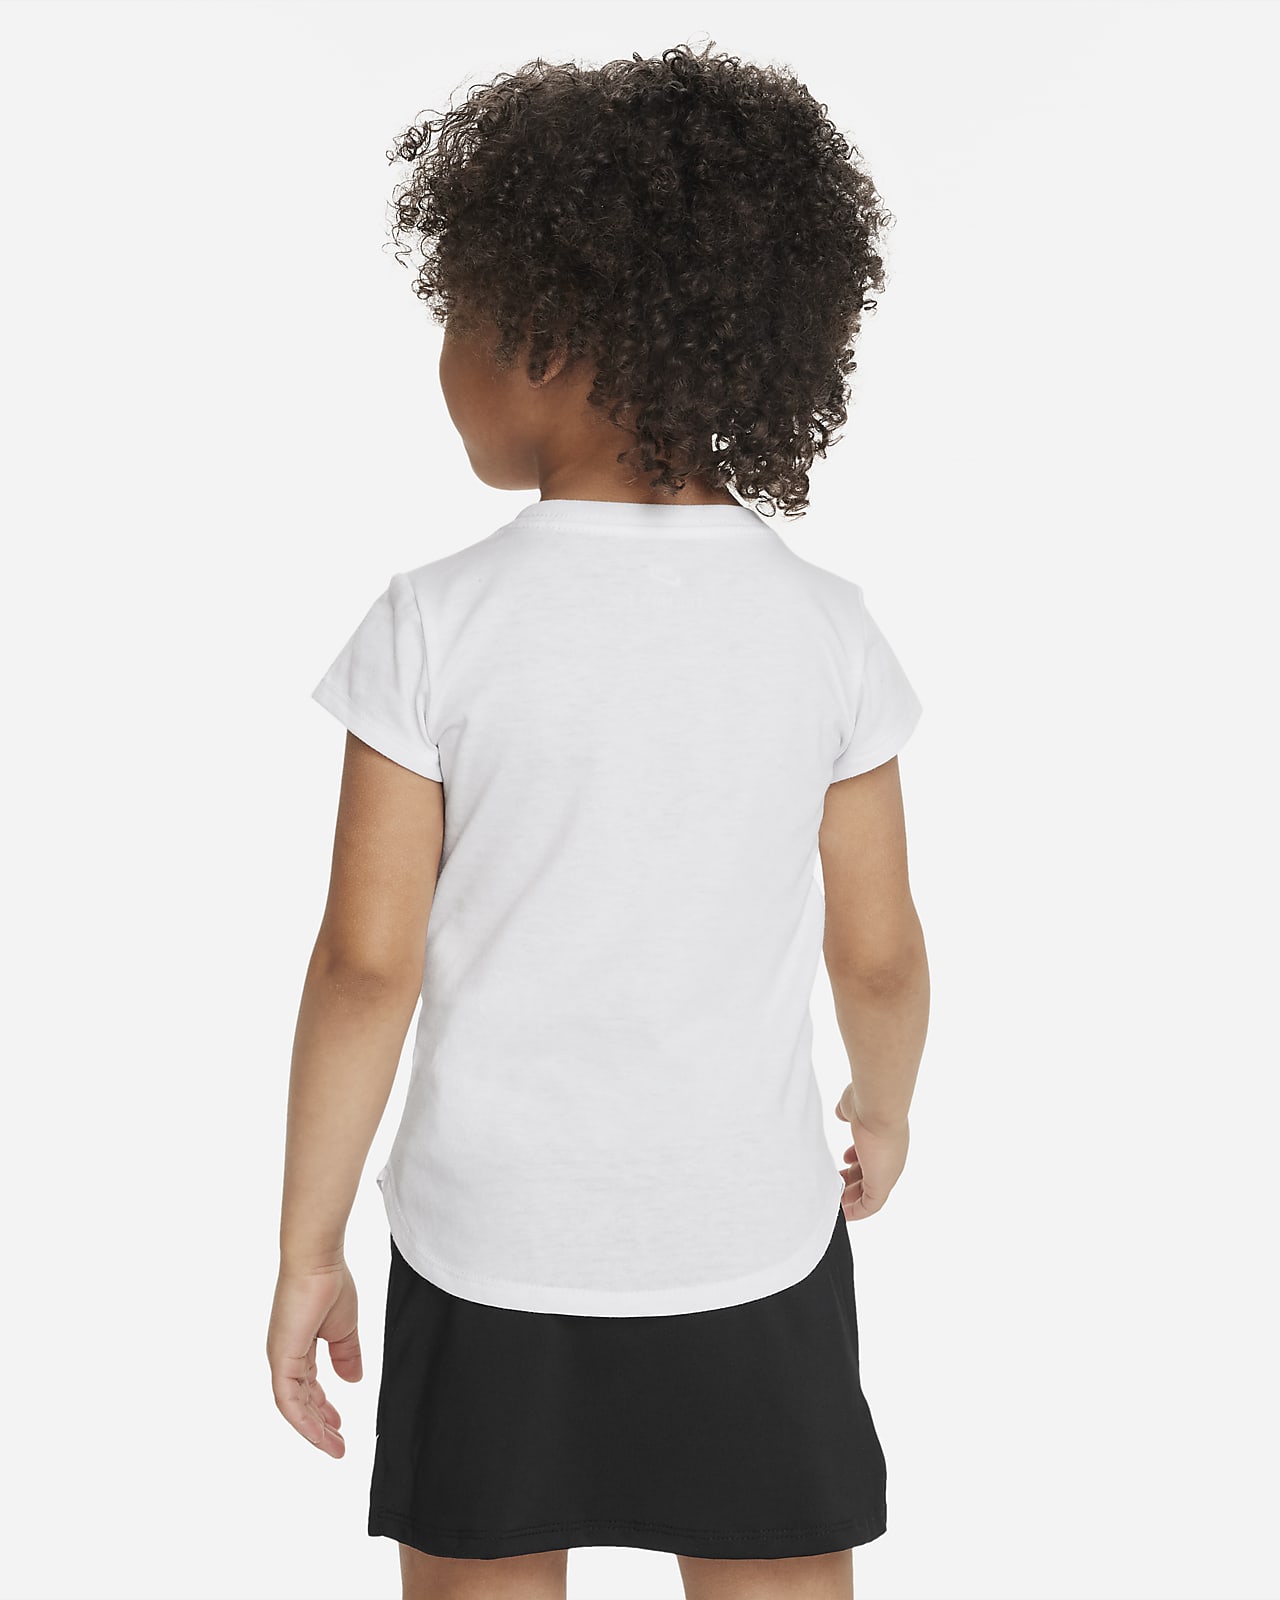 Nike Snack Pack Verbiage Tee Toddler T-Shirt